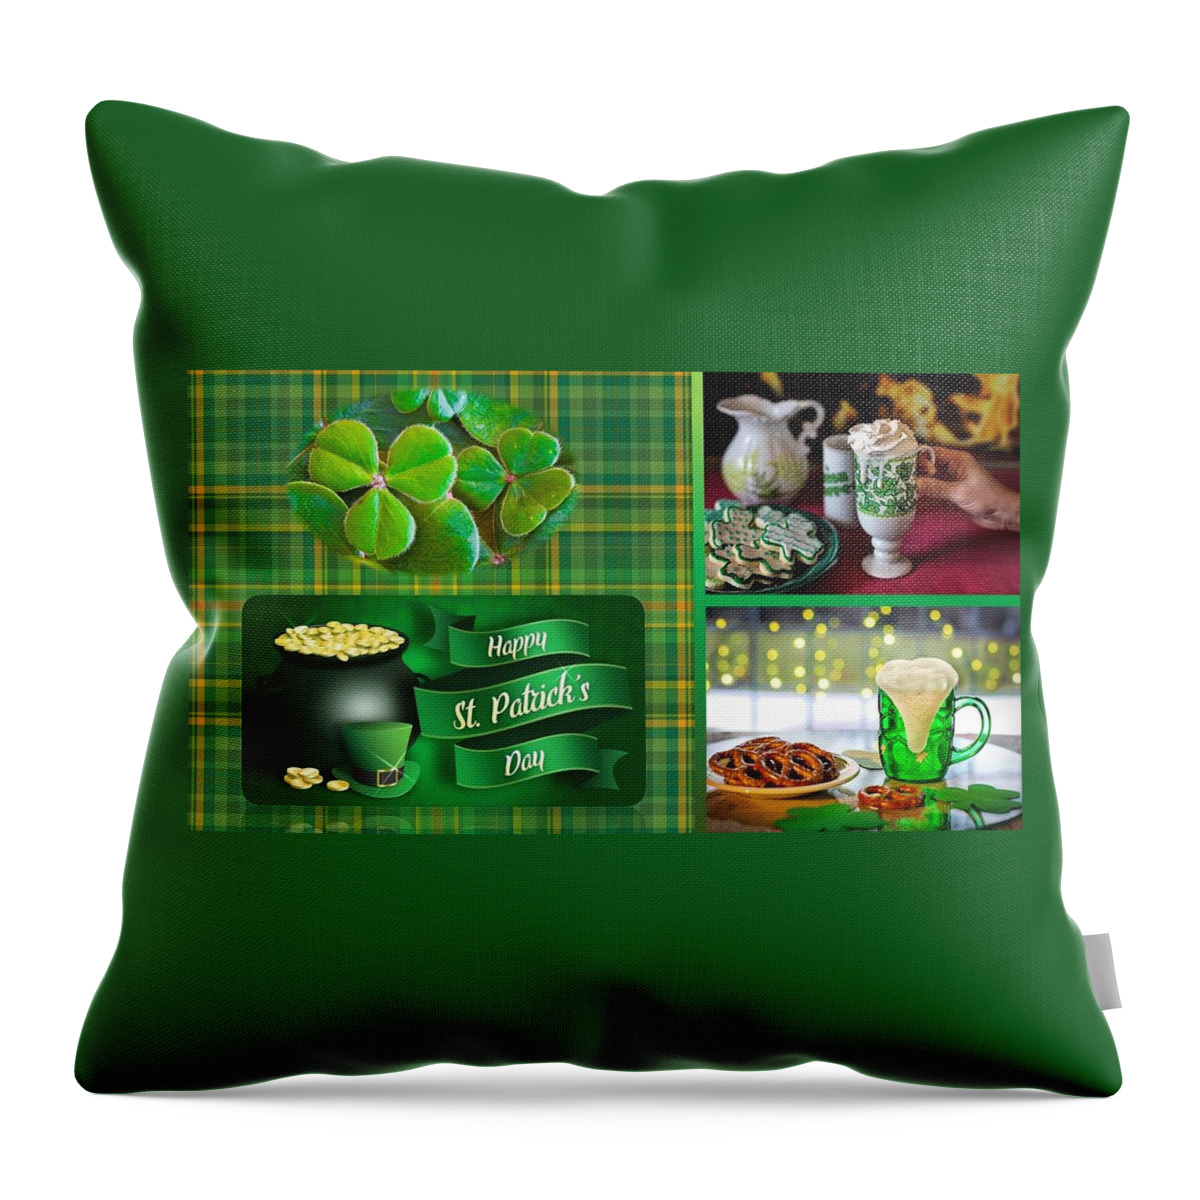 Irish Throw Pillow featuring the mixed media St. Patrick's Day Celebration by Nancy Ayanna Wyatt